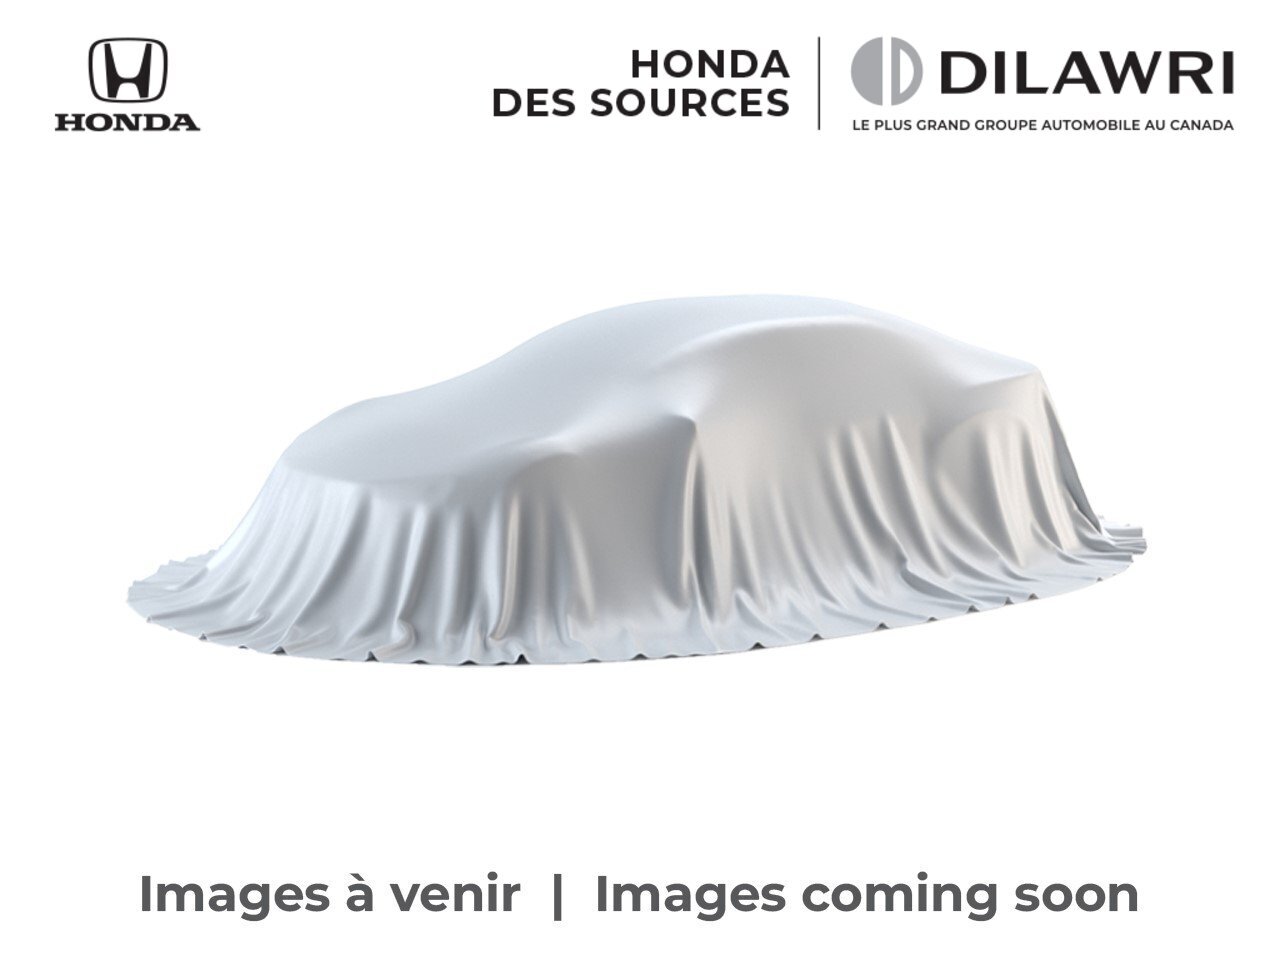 2020 Honda CR-V TOURING, 4X4, Cuir, Nav, Carplay, Bluetooth, USB 4